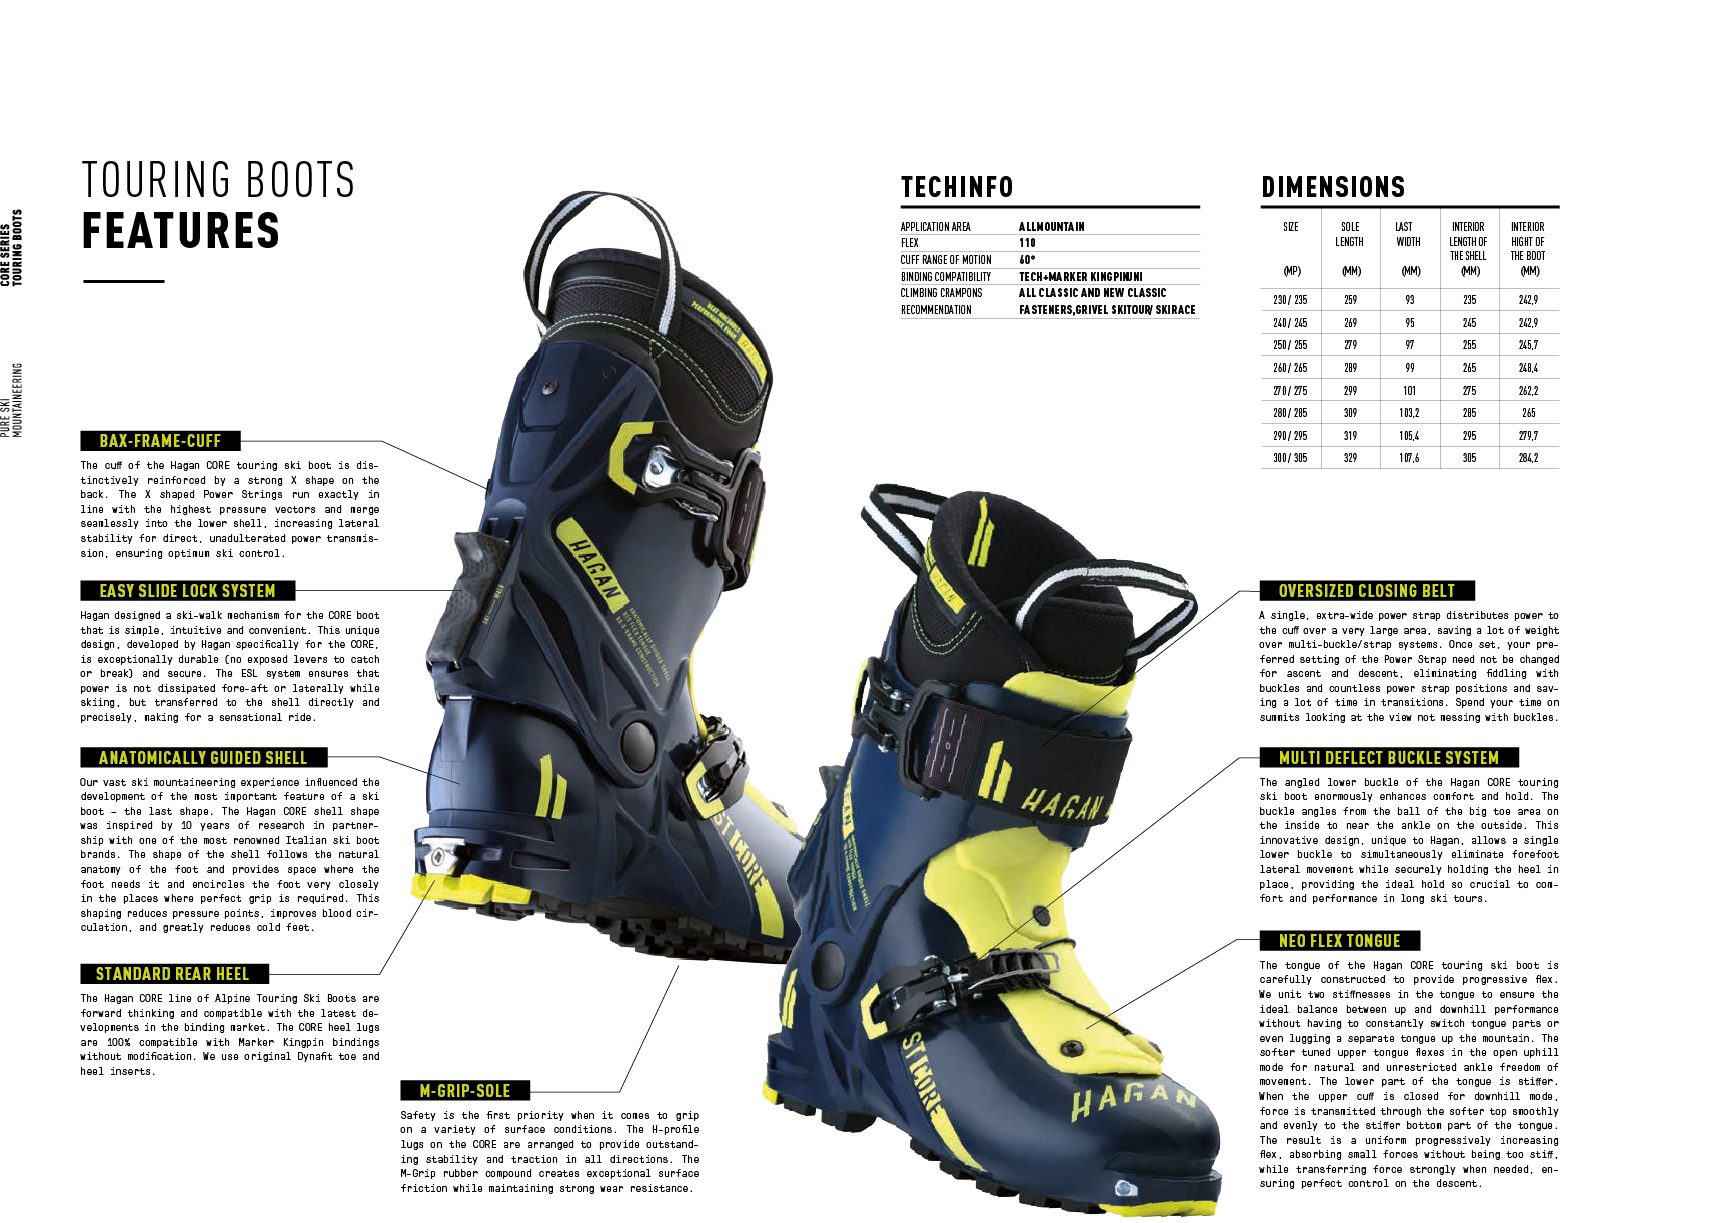 284 mm ski boot size